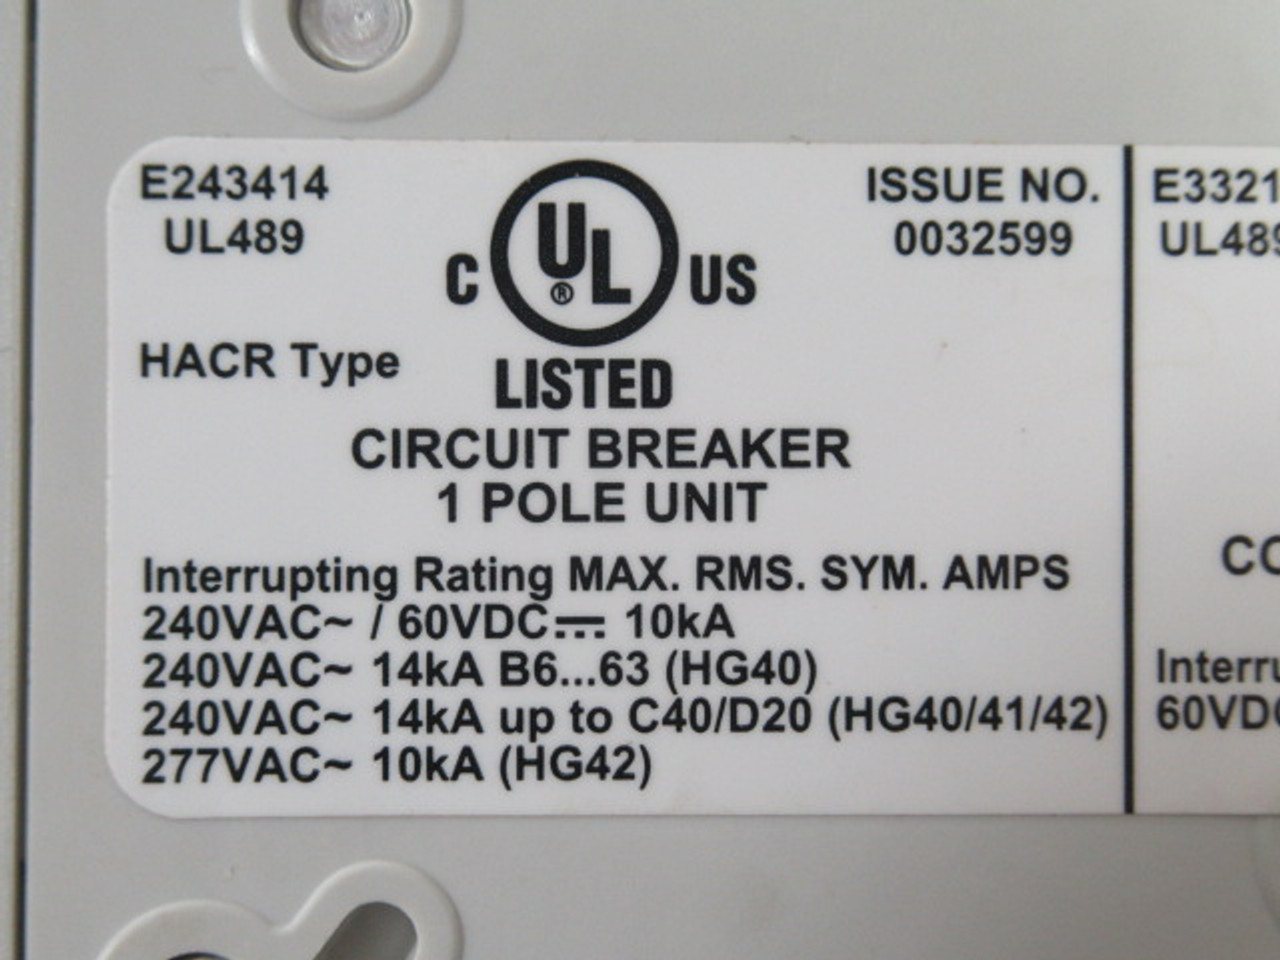 Siemens 5SJ4110-7HG42 Circuit Breaker 277VAC 10A 1P USED